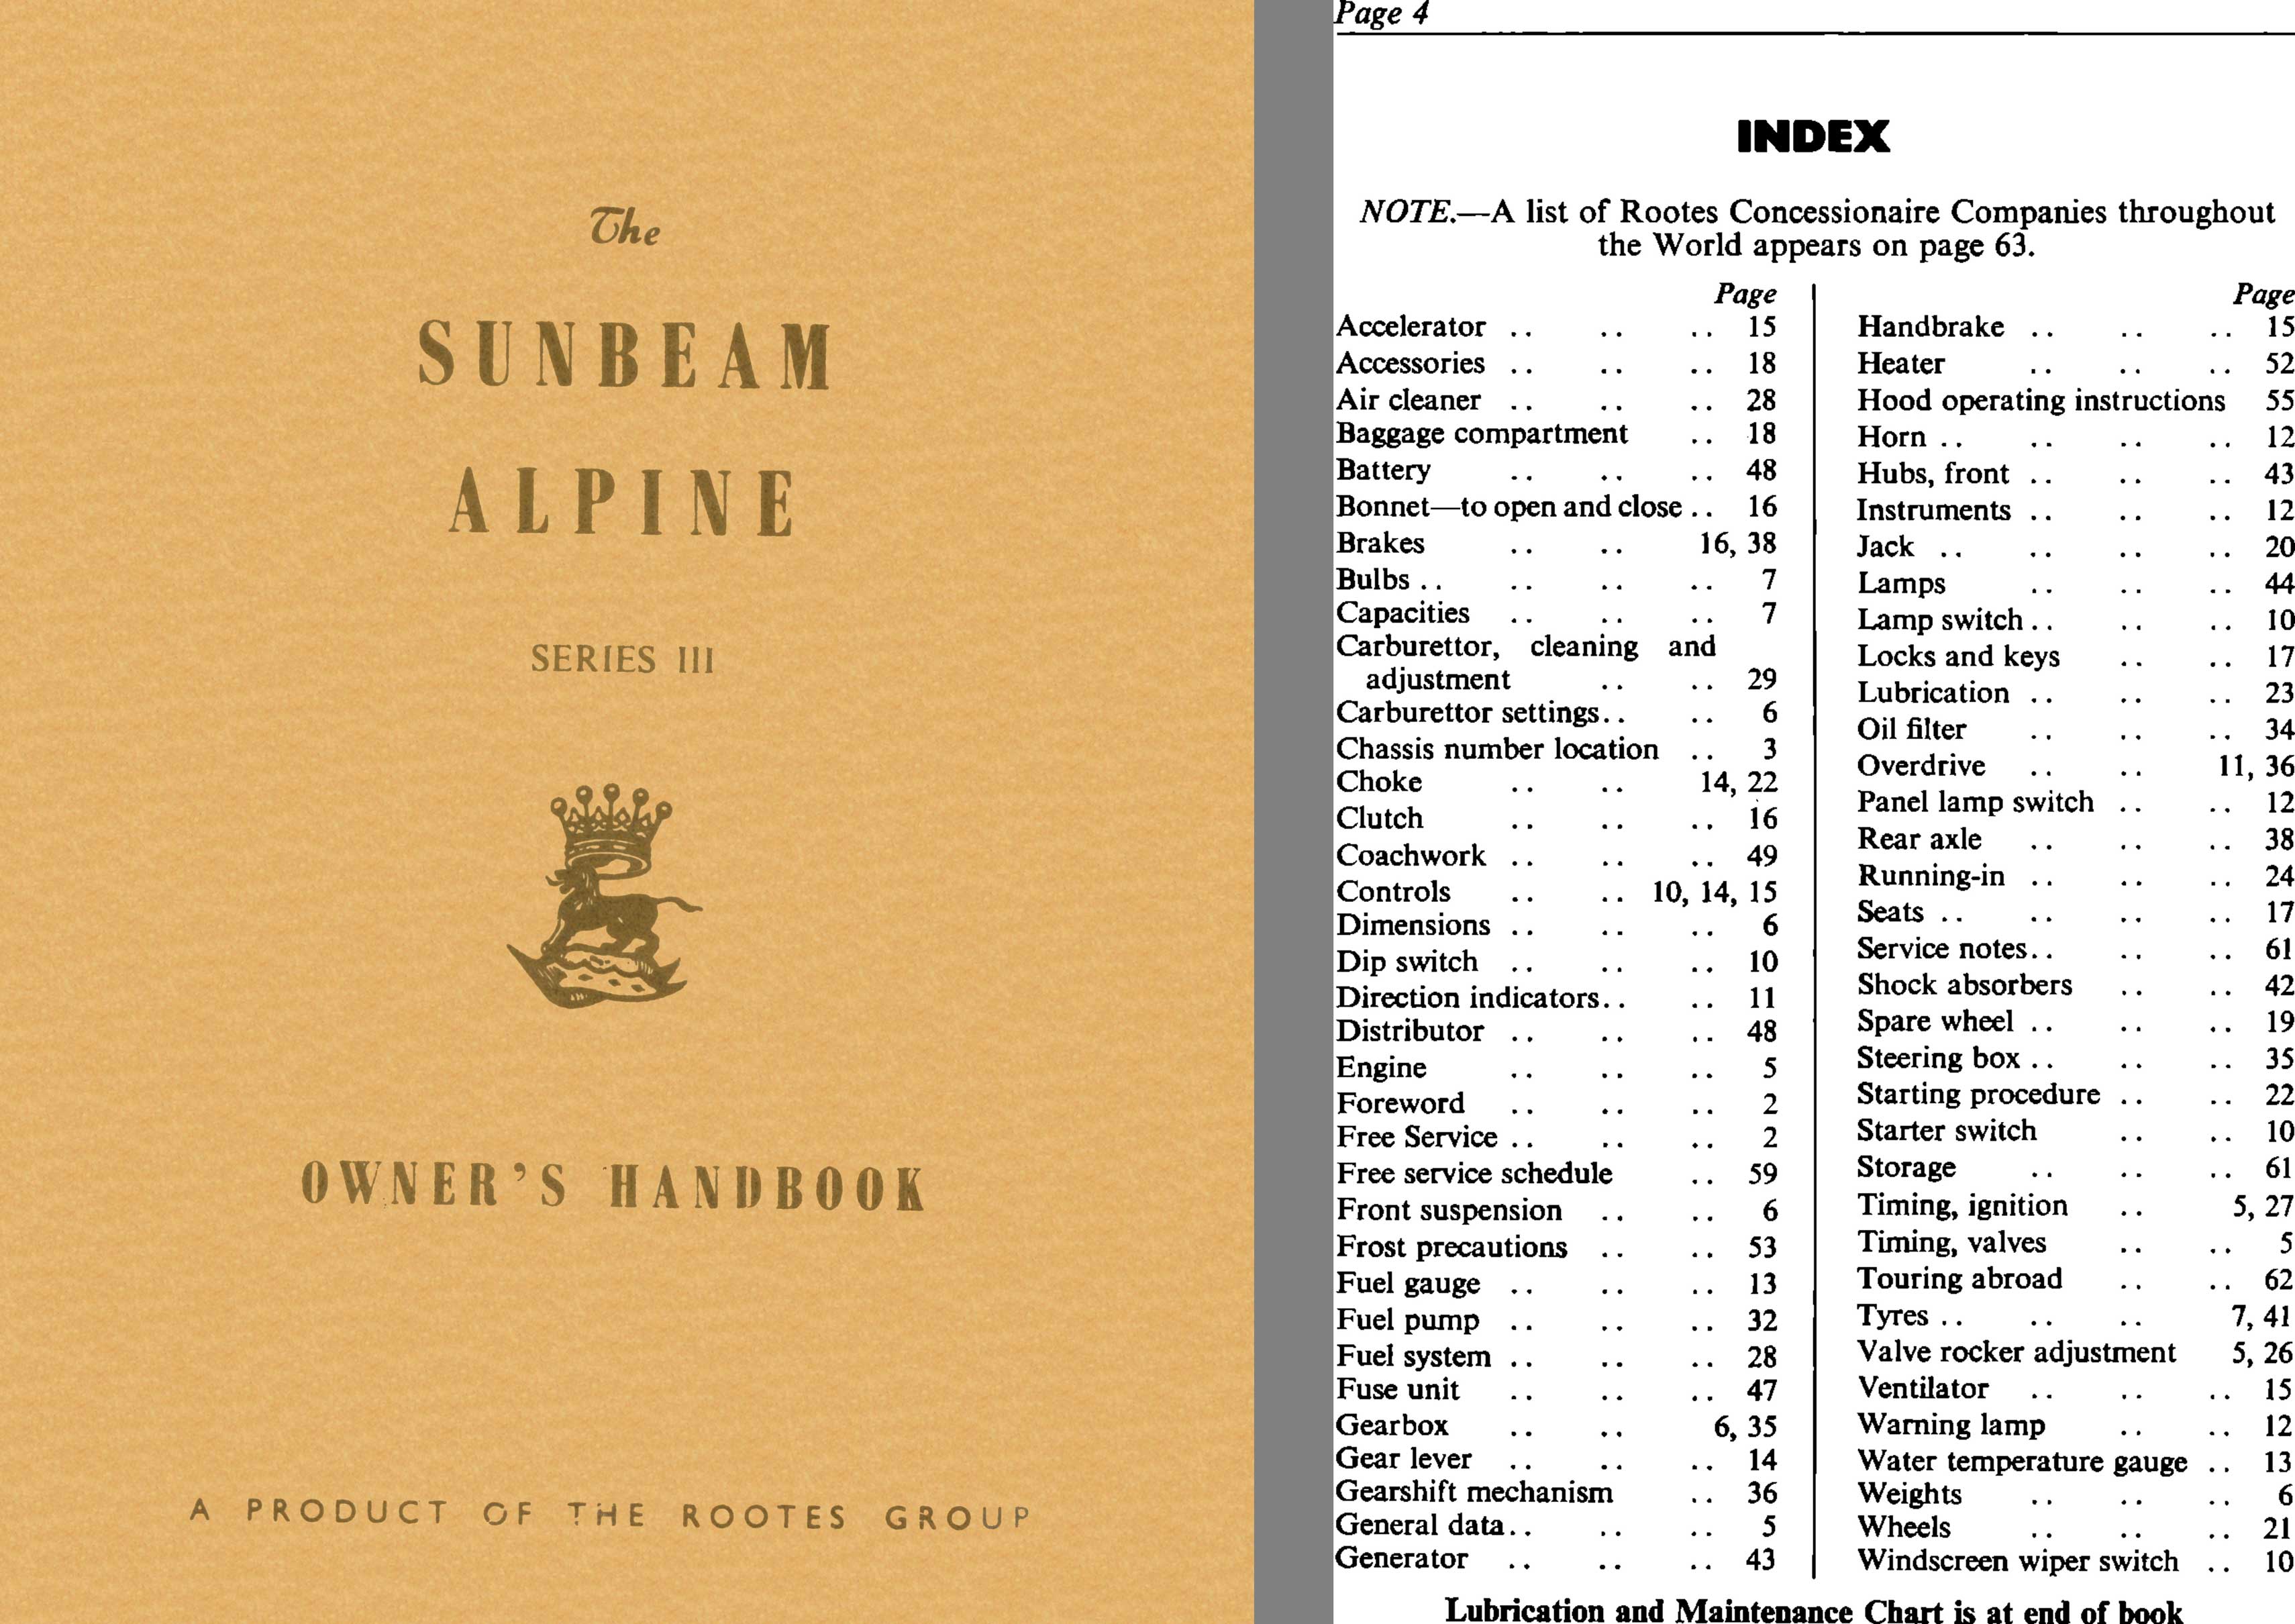 Sunbeam c1963 - Sunbeam Alpine Series III Owner's Handbook